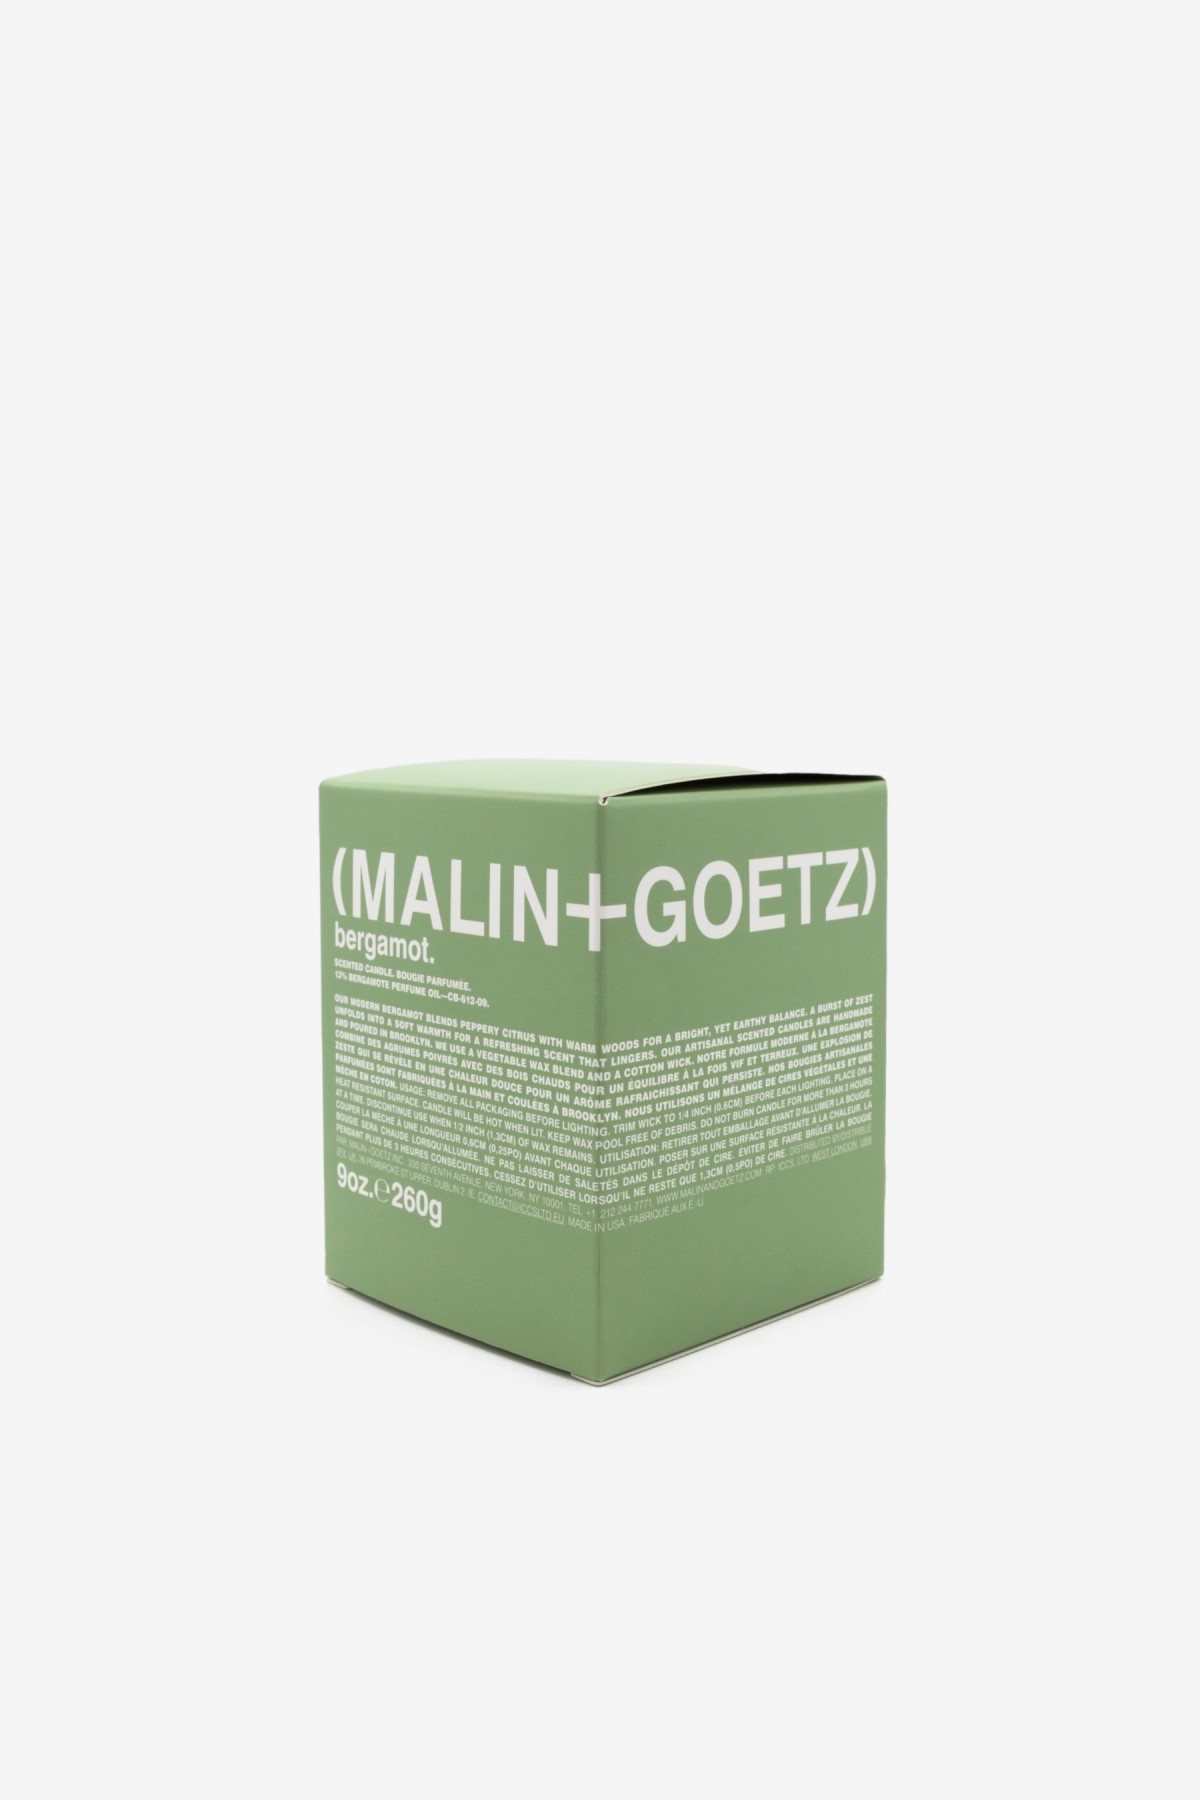 Malin+Goetz Bergamot Candle 260gr in 